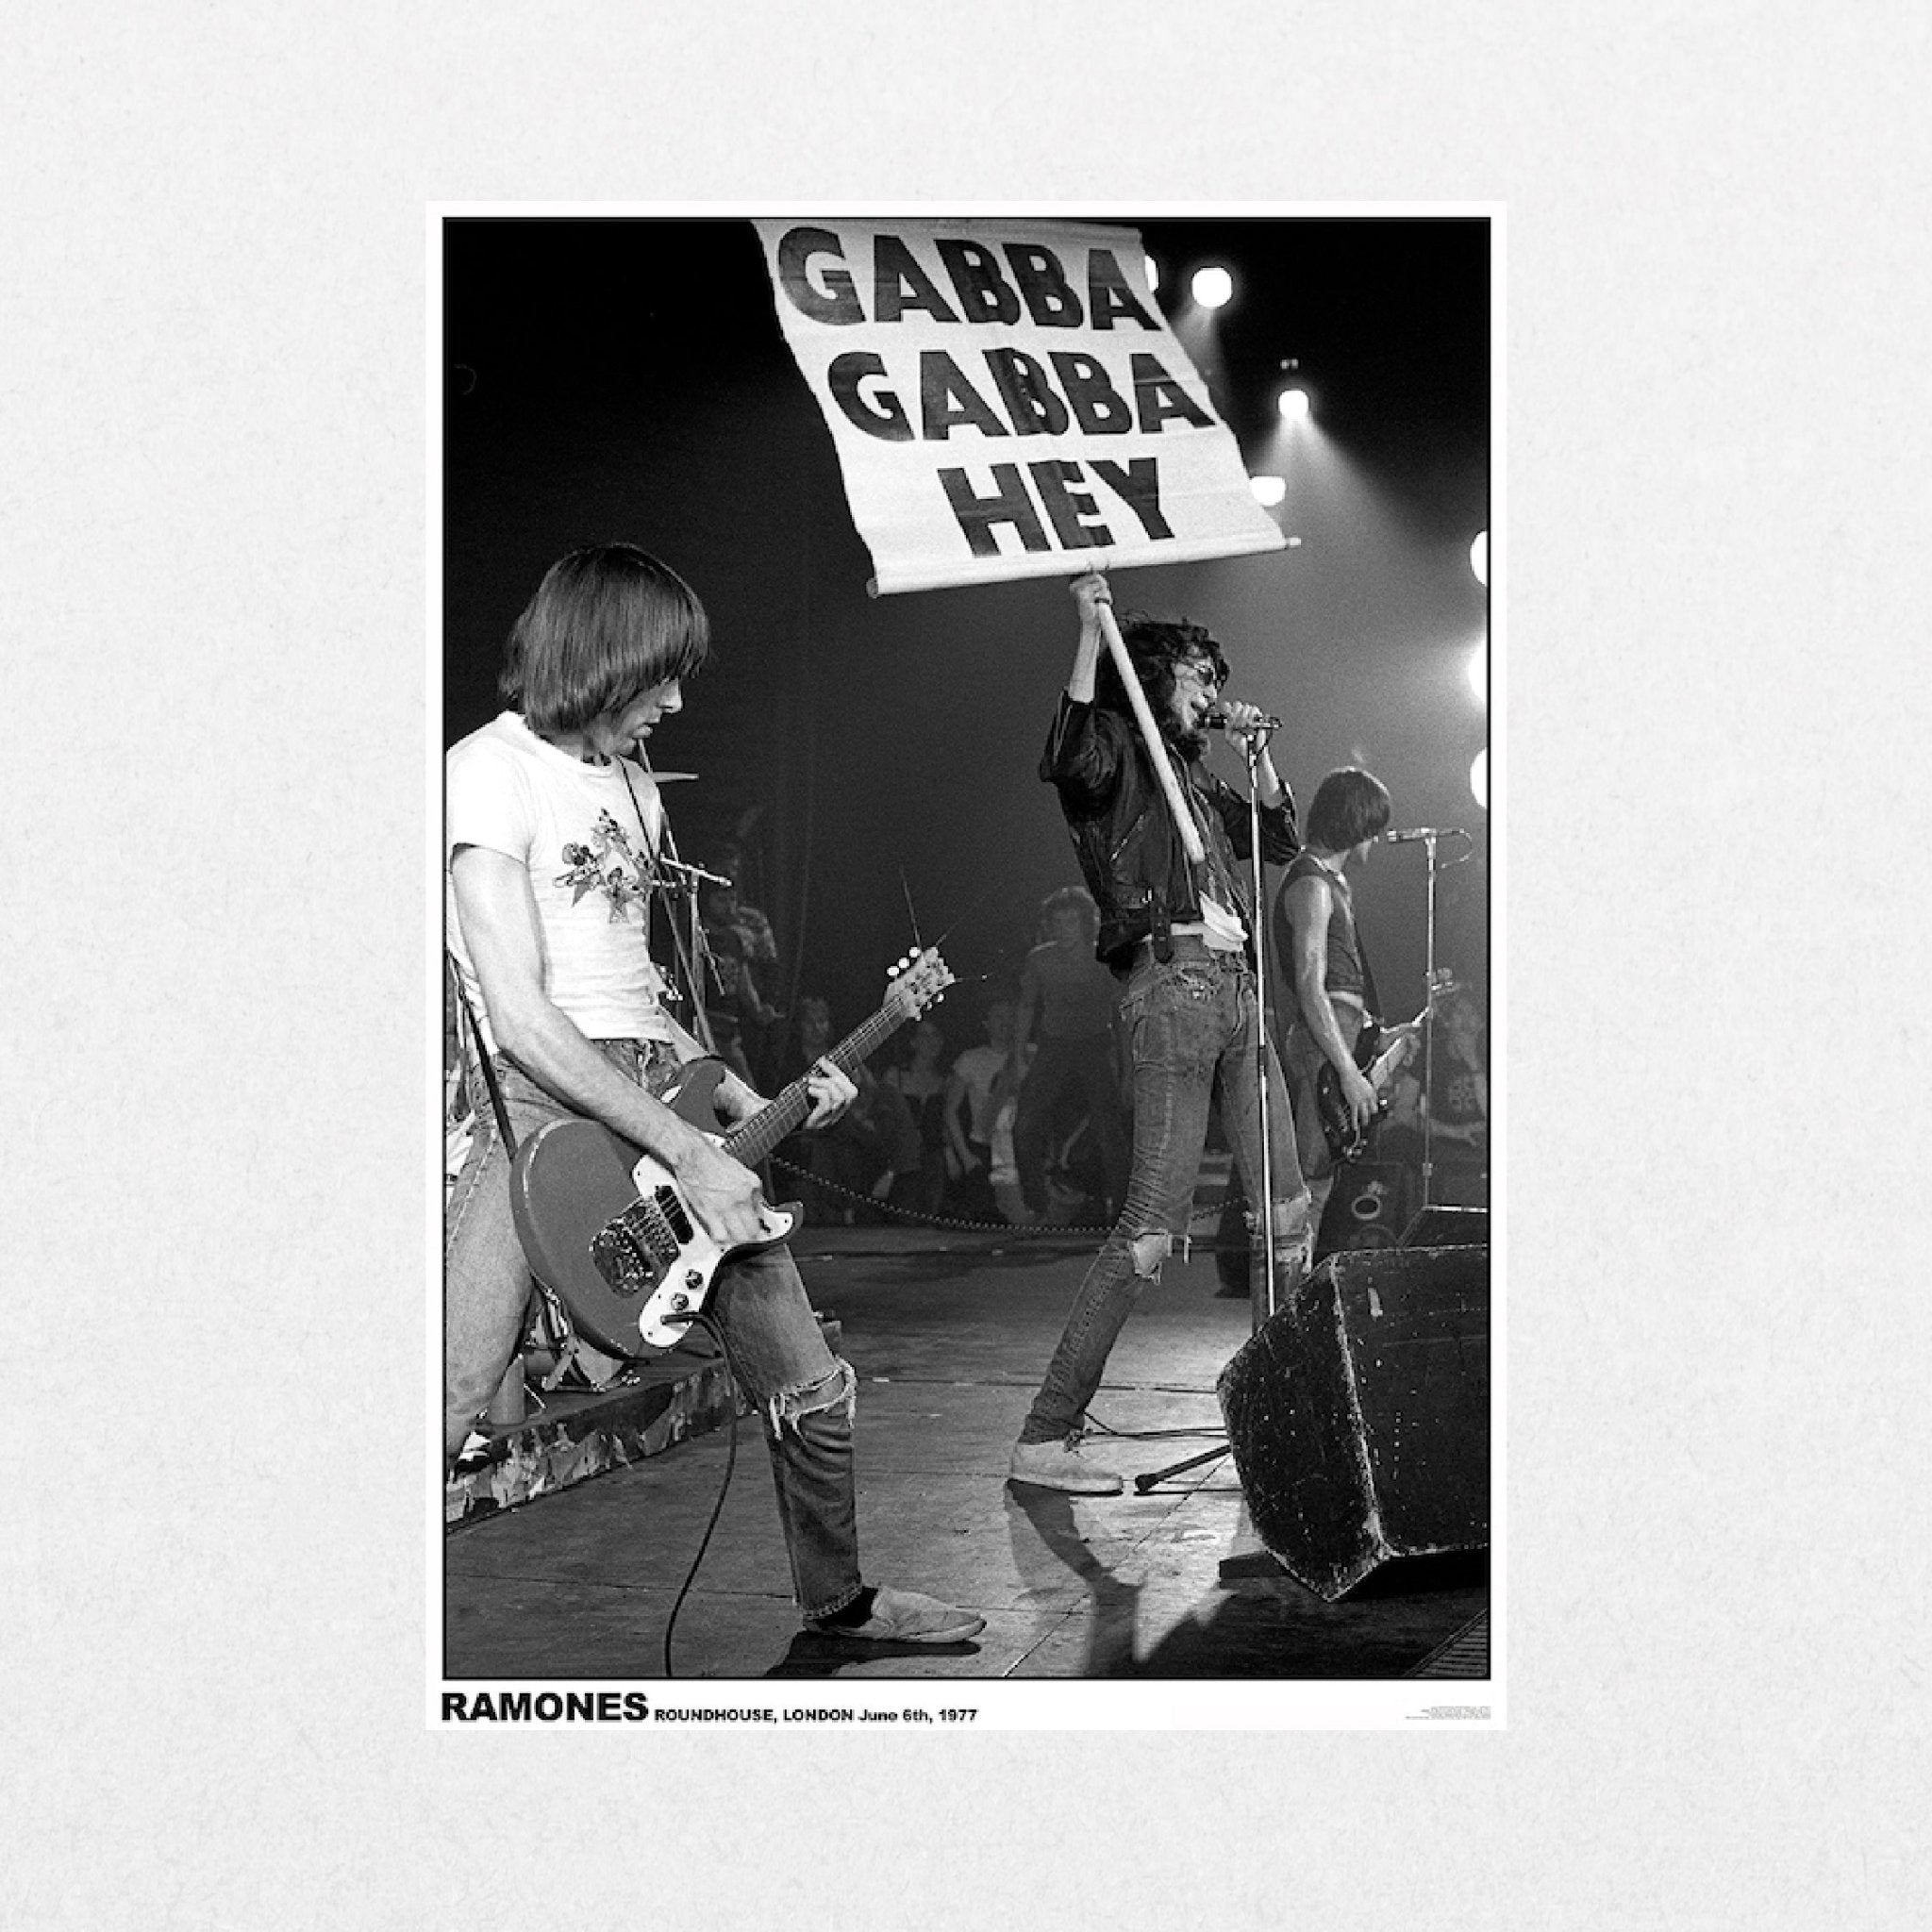 The Ramones - Gabba Gabba Hey, 1977 - El Cartel